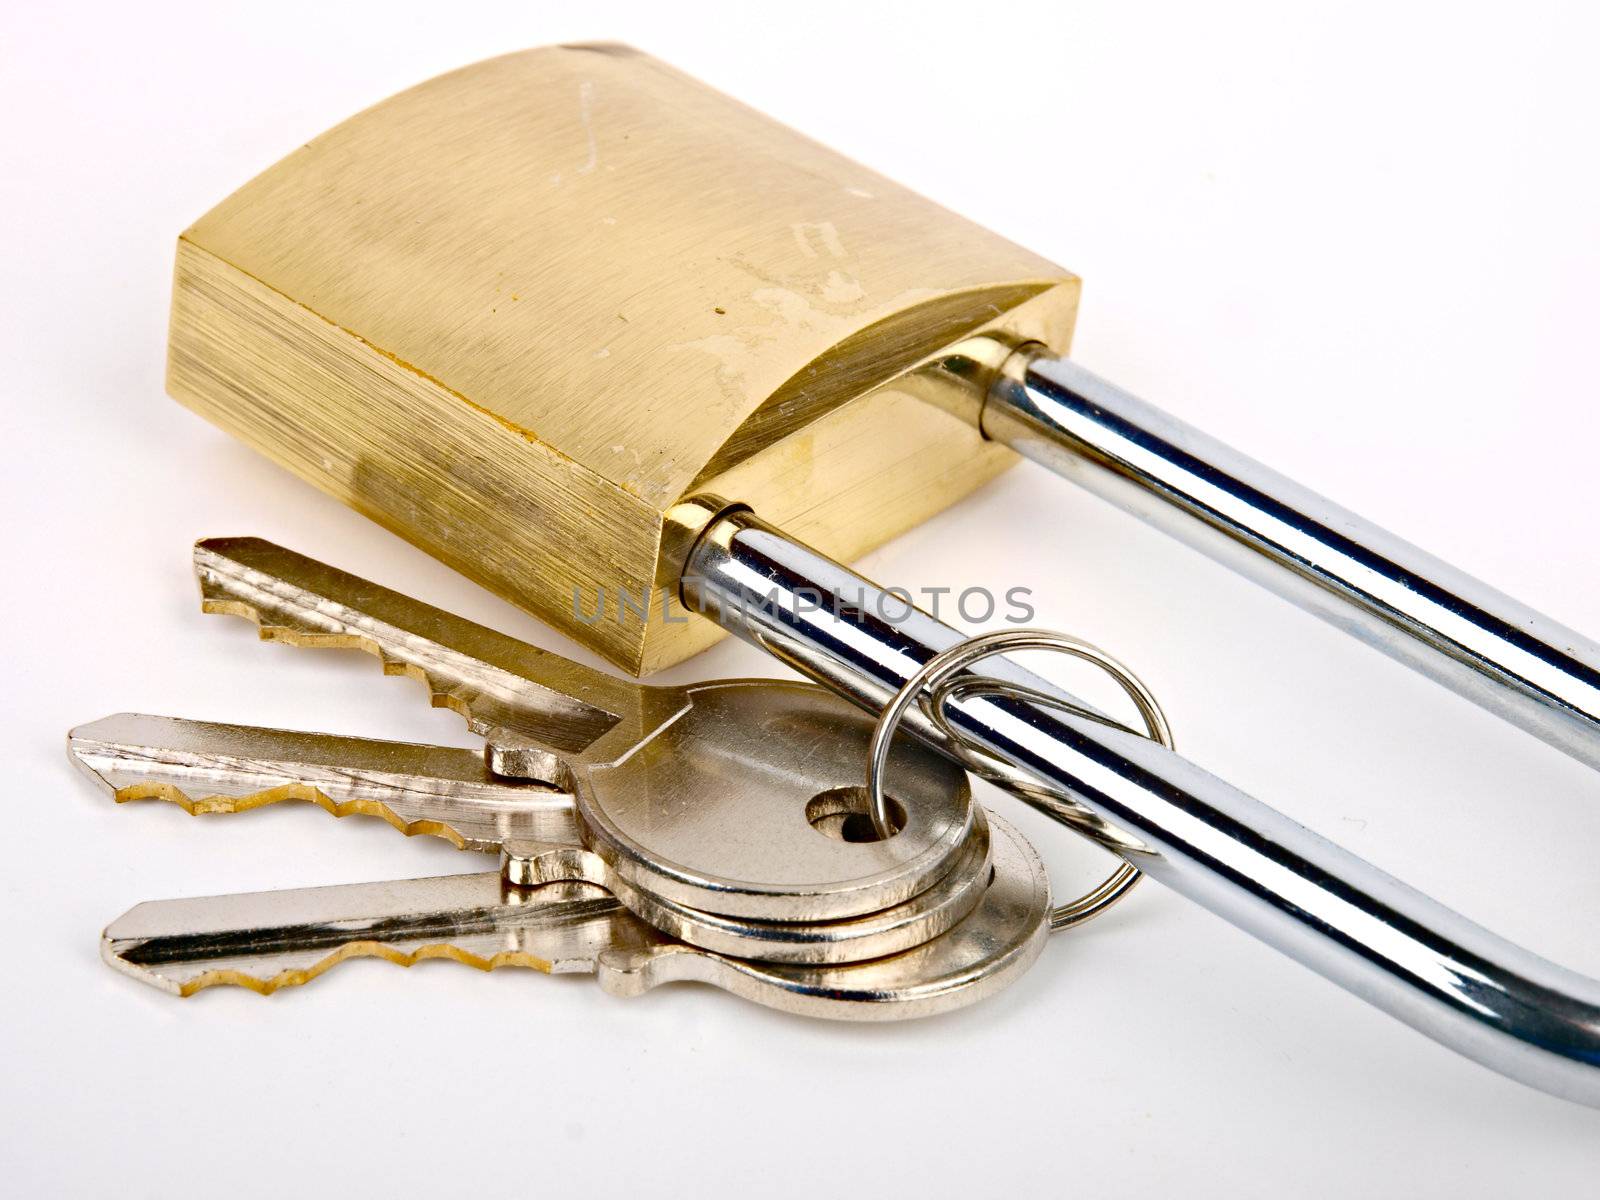 Padlock with keys by dotweb